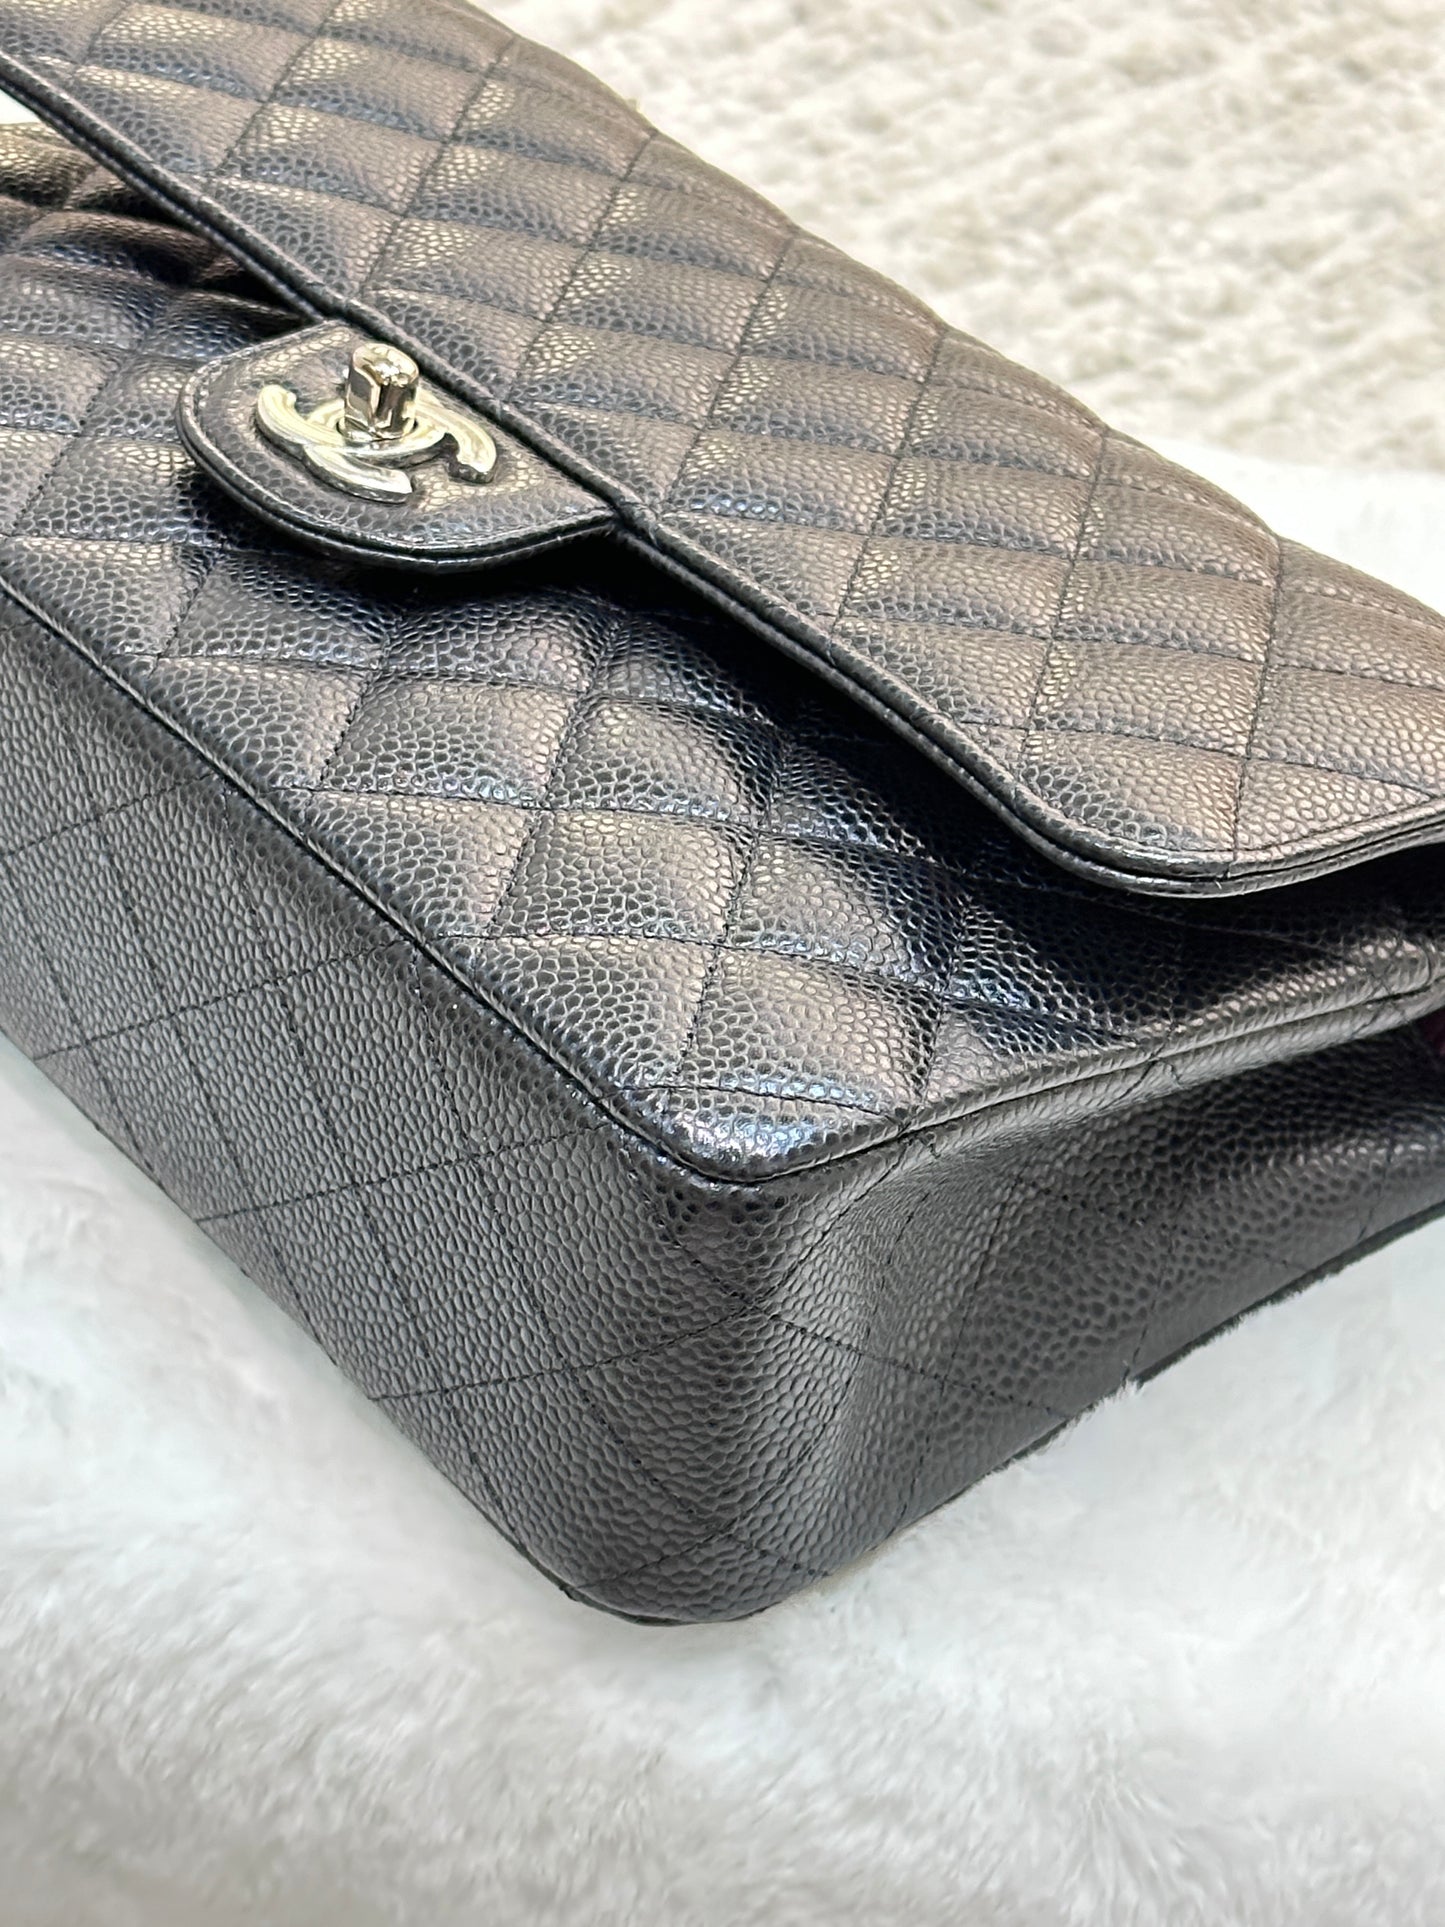 Chanel Medium Classic Flap Bag Caviar Black SHW